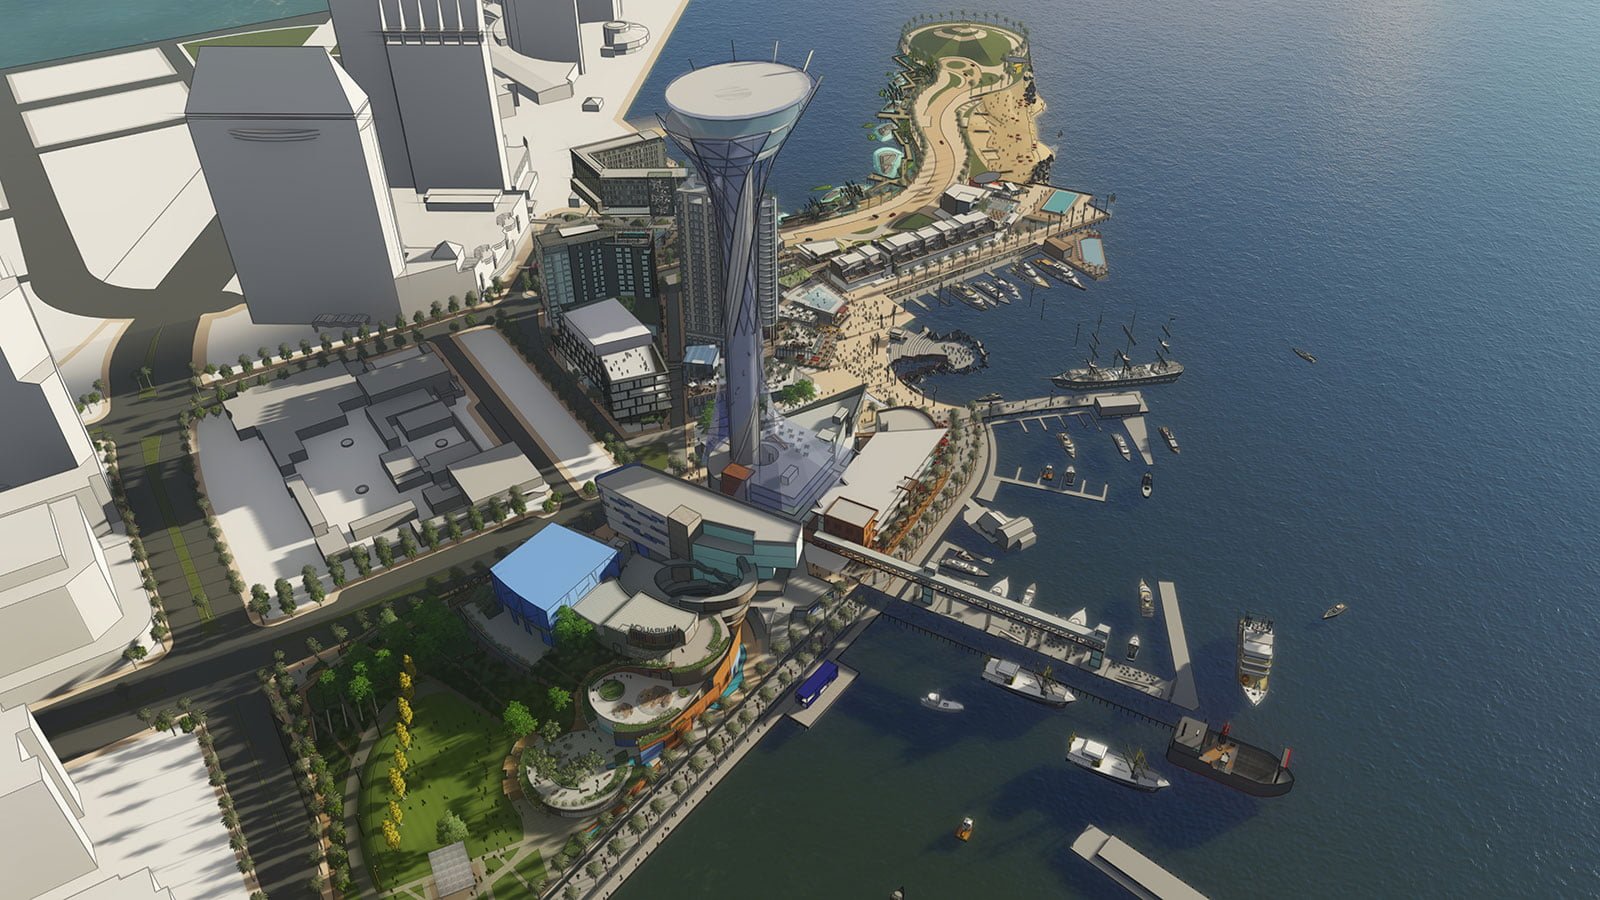 Seaport Village · RSM Design